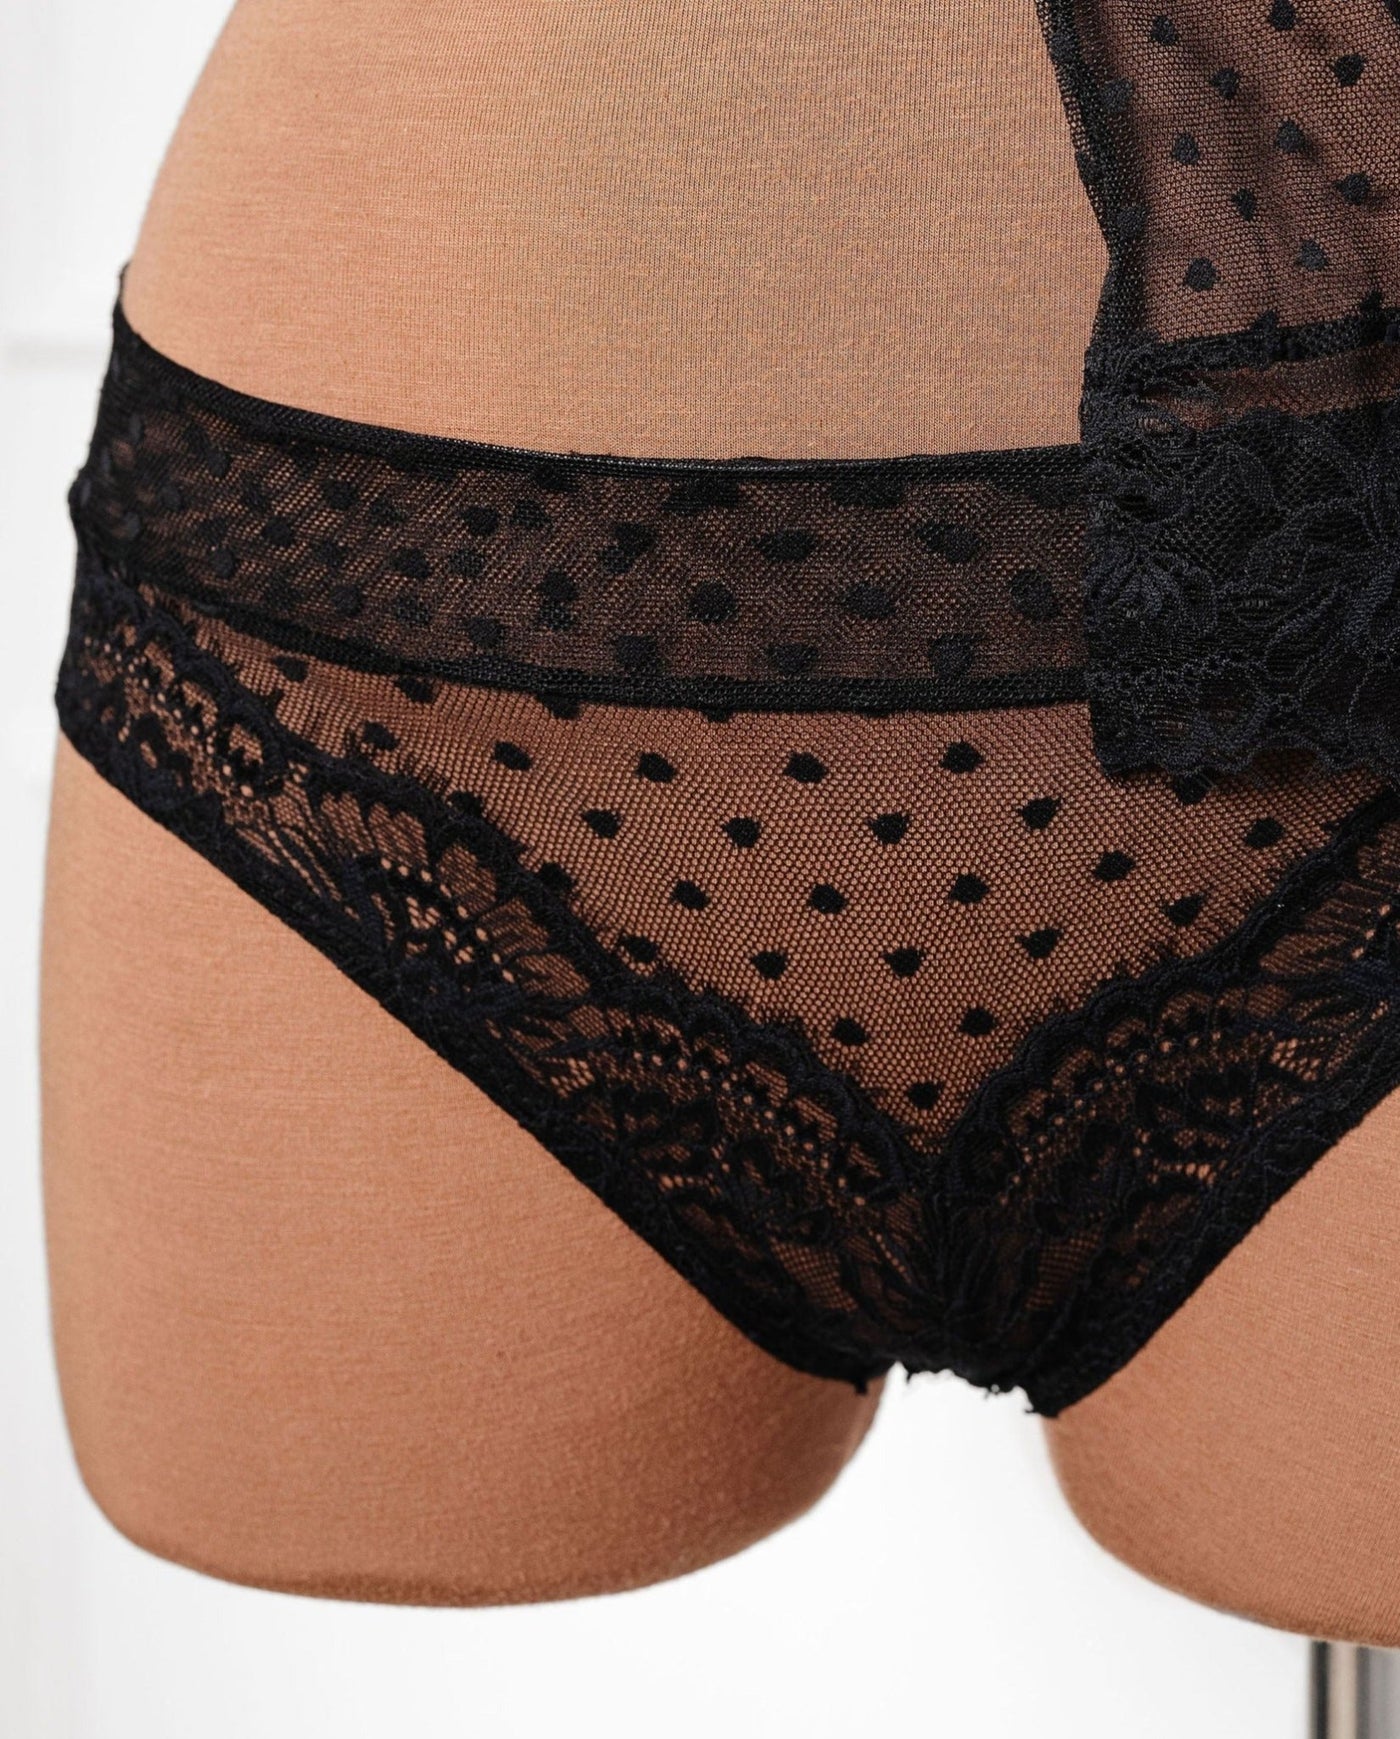 Lacy Polka Dot Crotchless Panty - Black - Mentionables